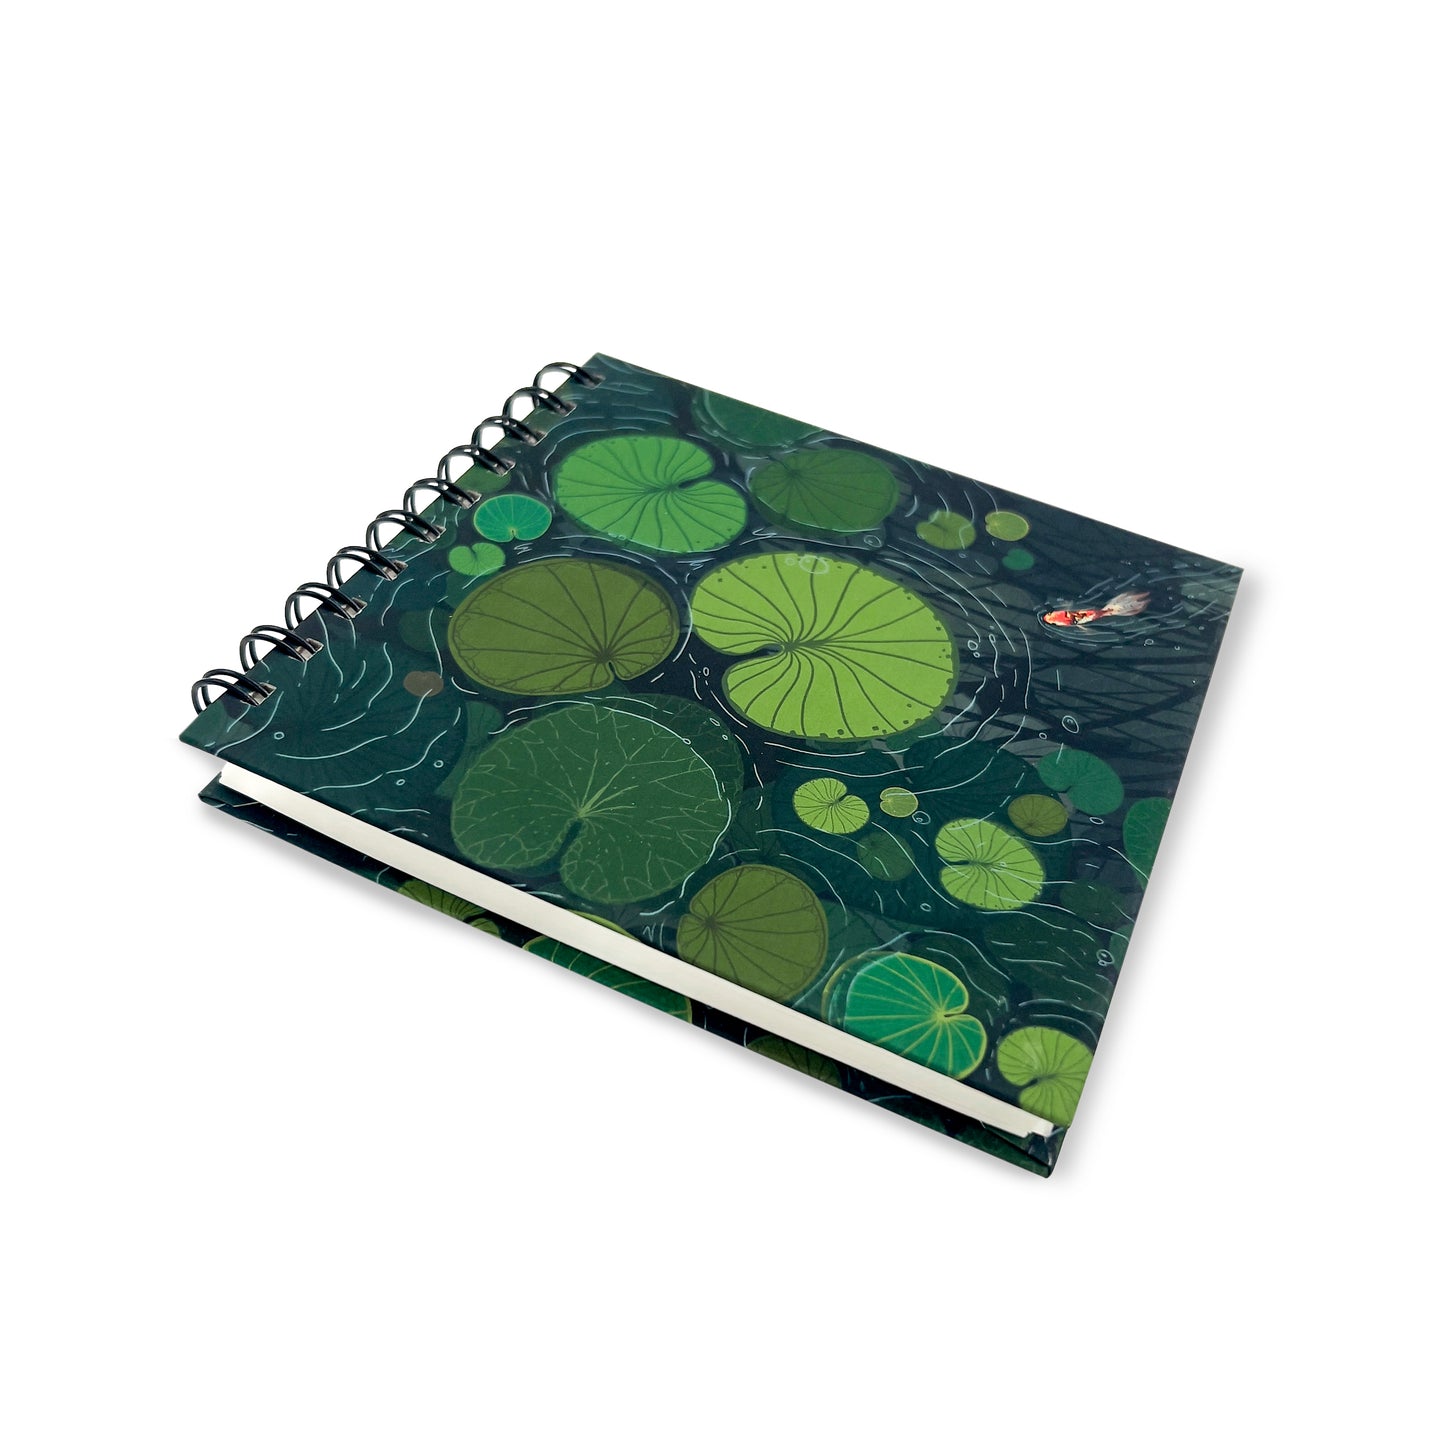 Koi Pond - Square Sketchbook